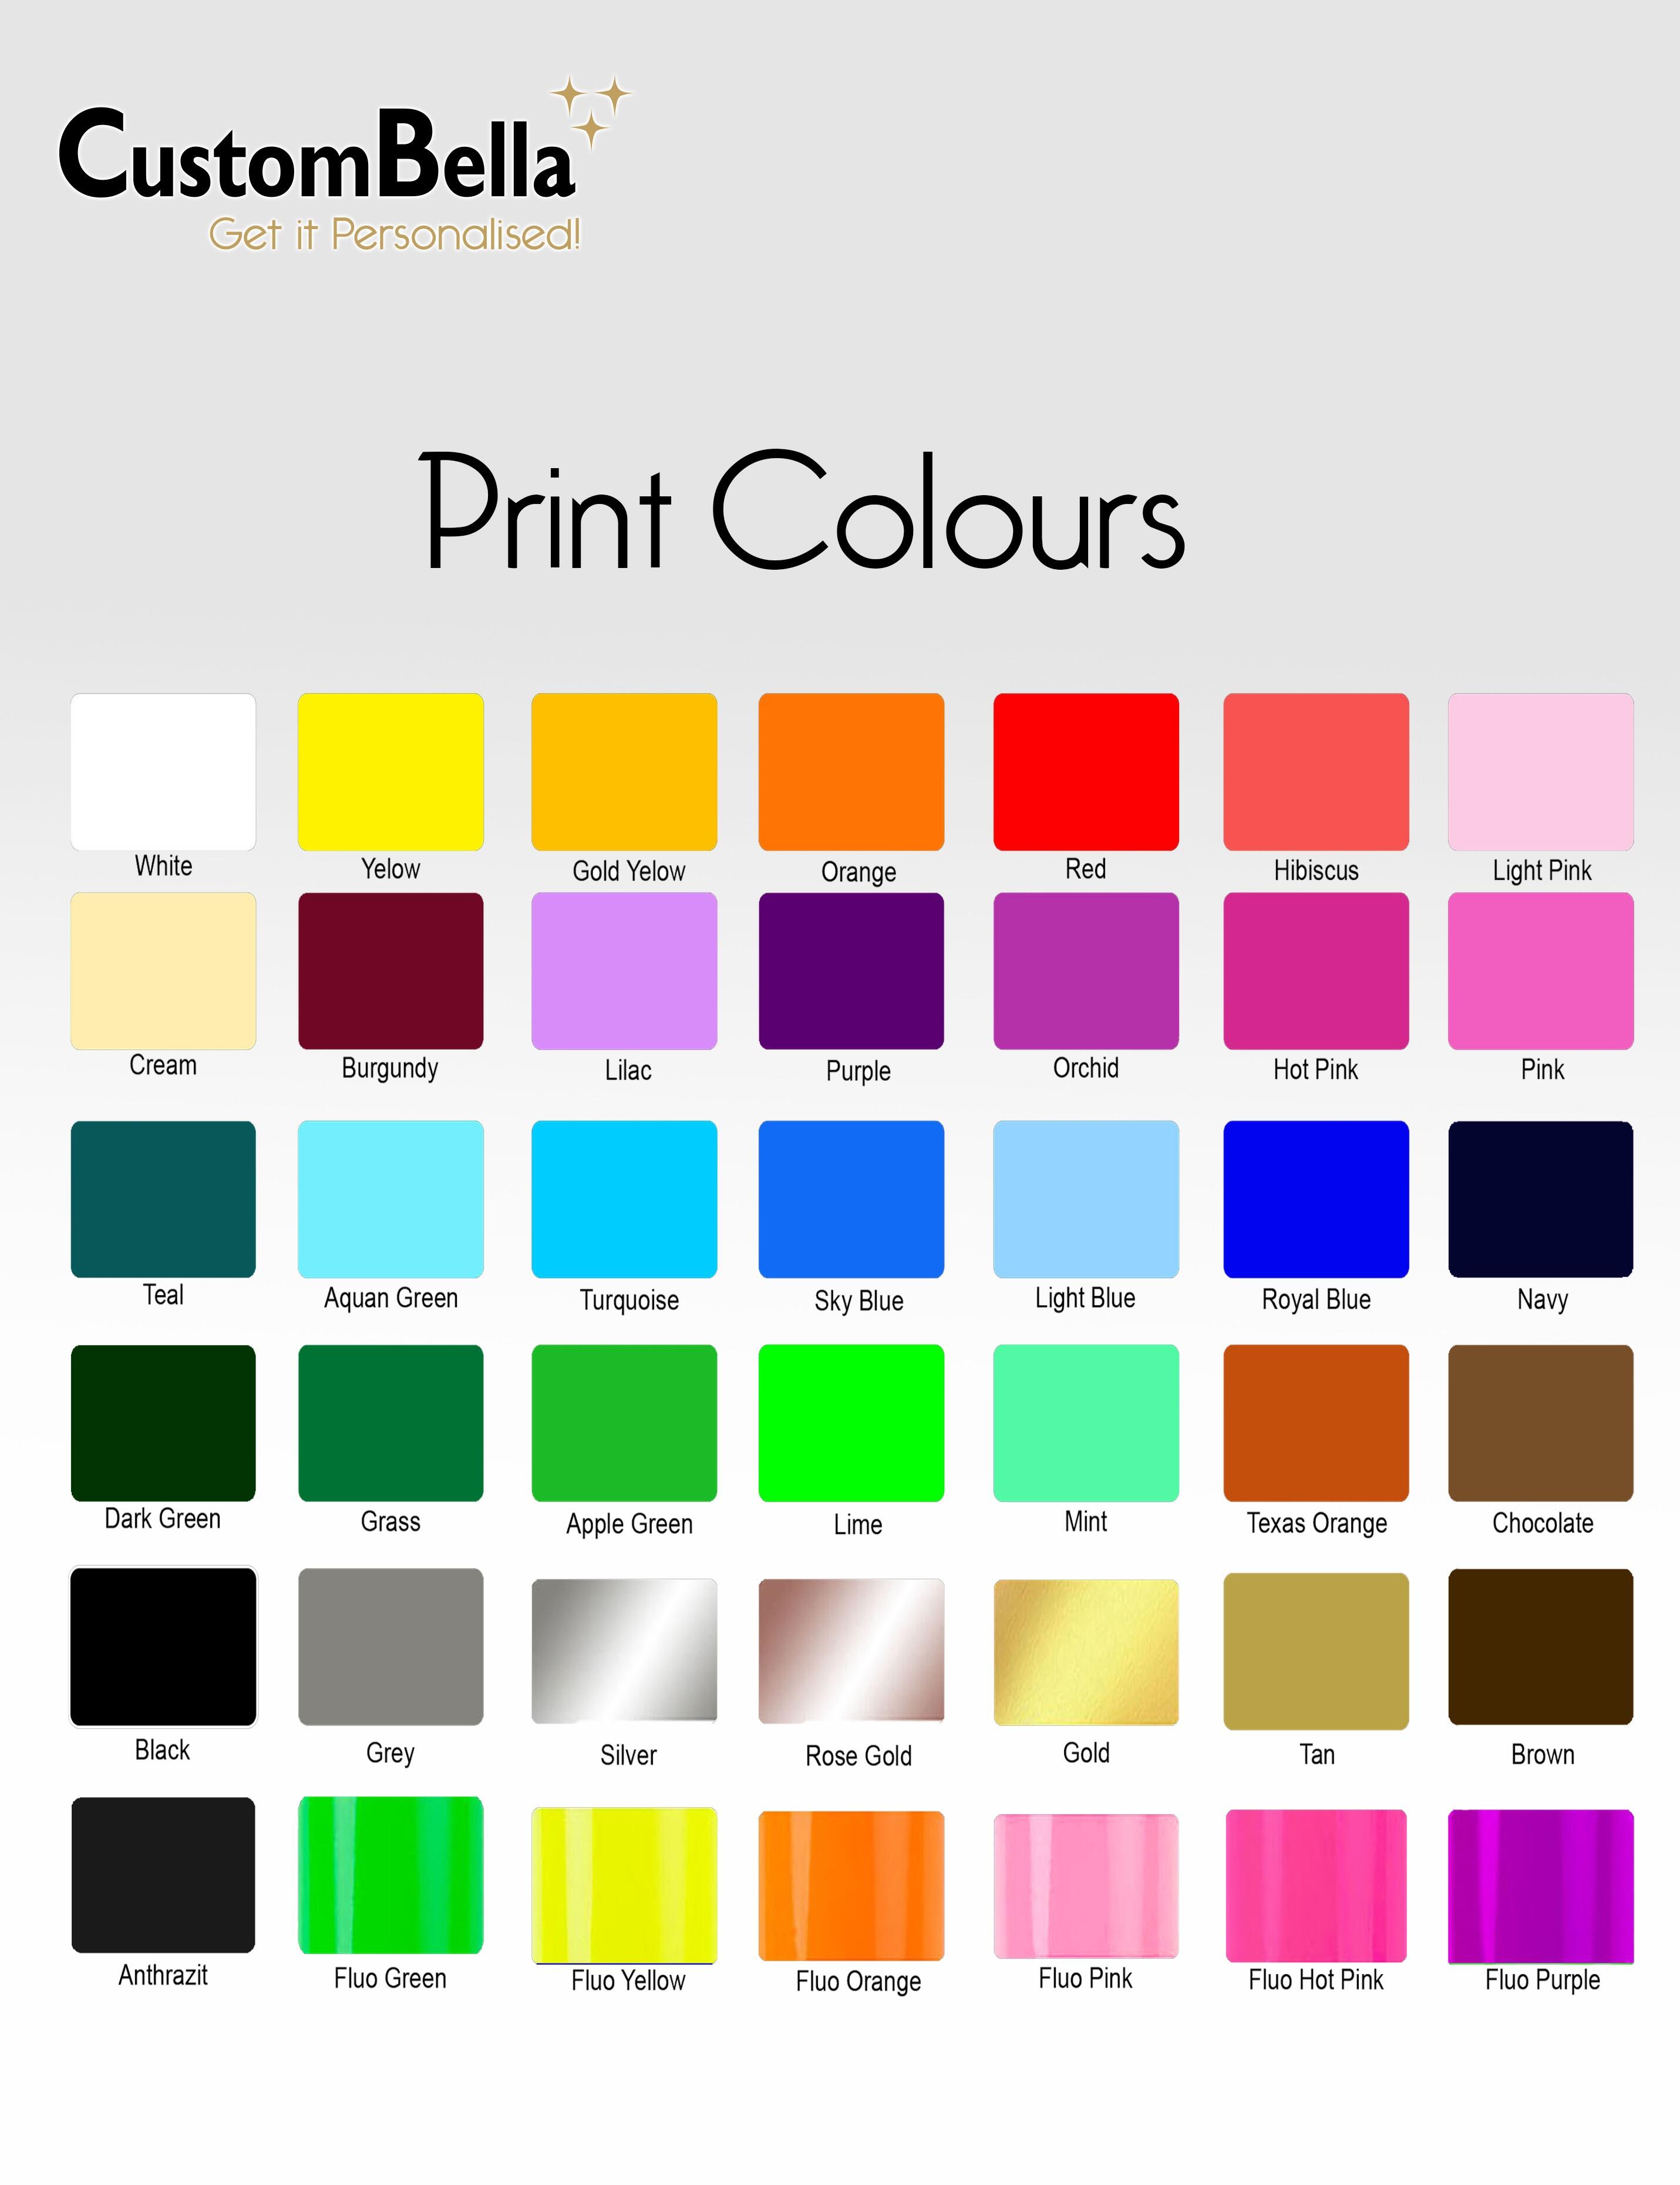 Custombella print colours to use